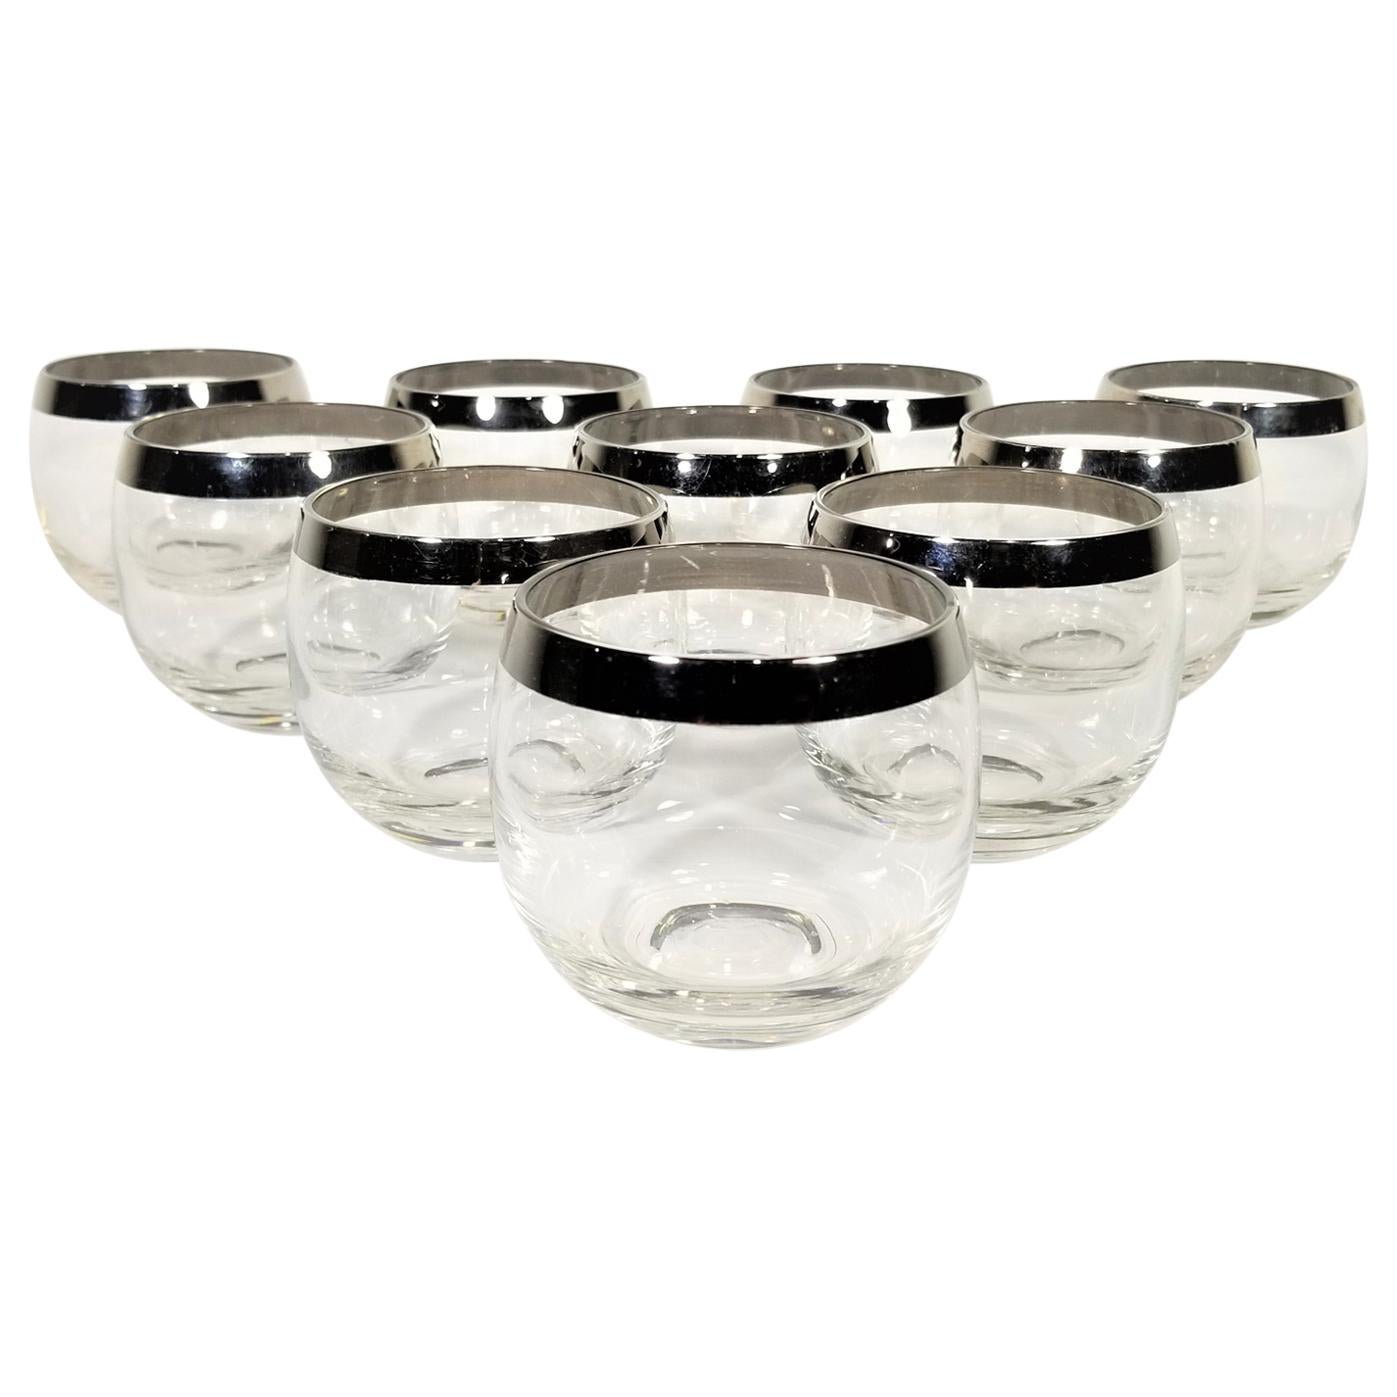 Dorothy Thorpe 1960s Midcentury Silver Rimmed Glassware Barware Set of 10